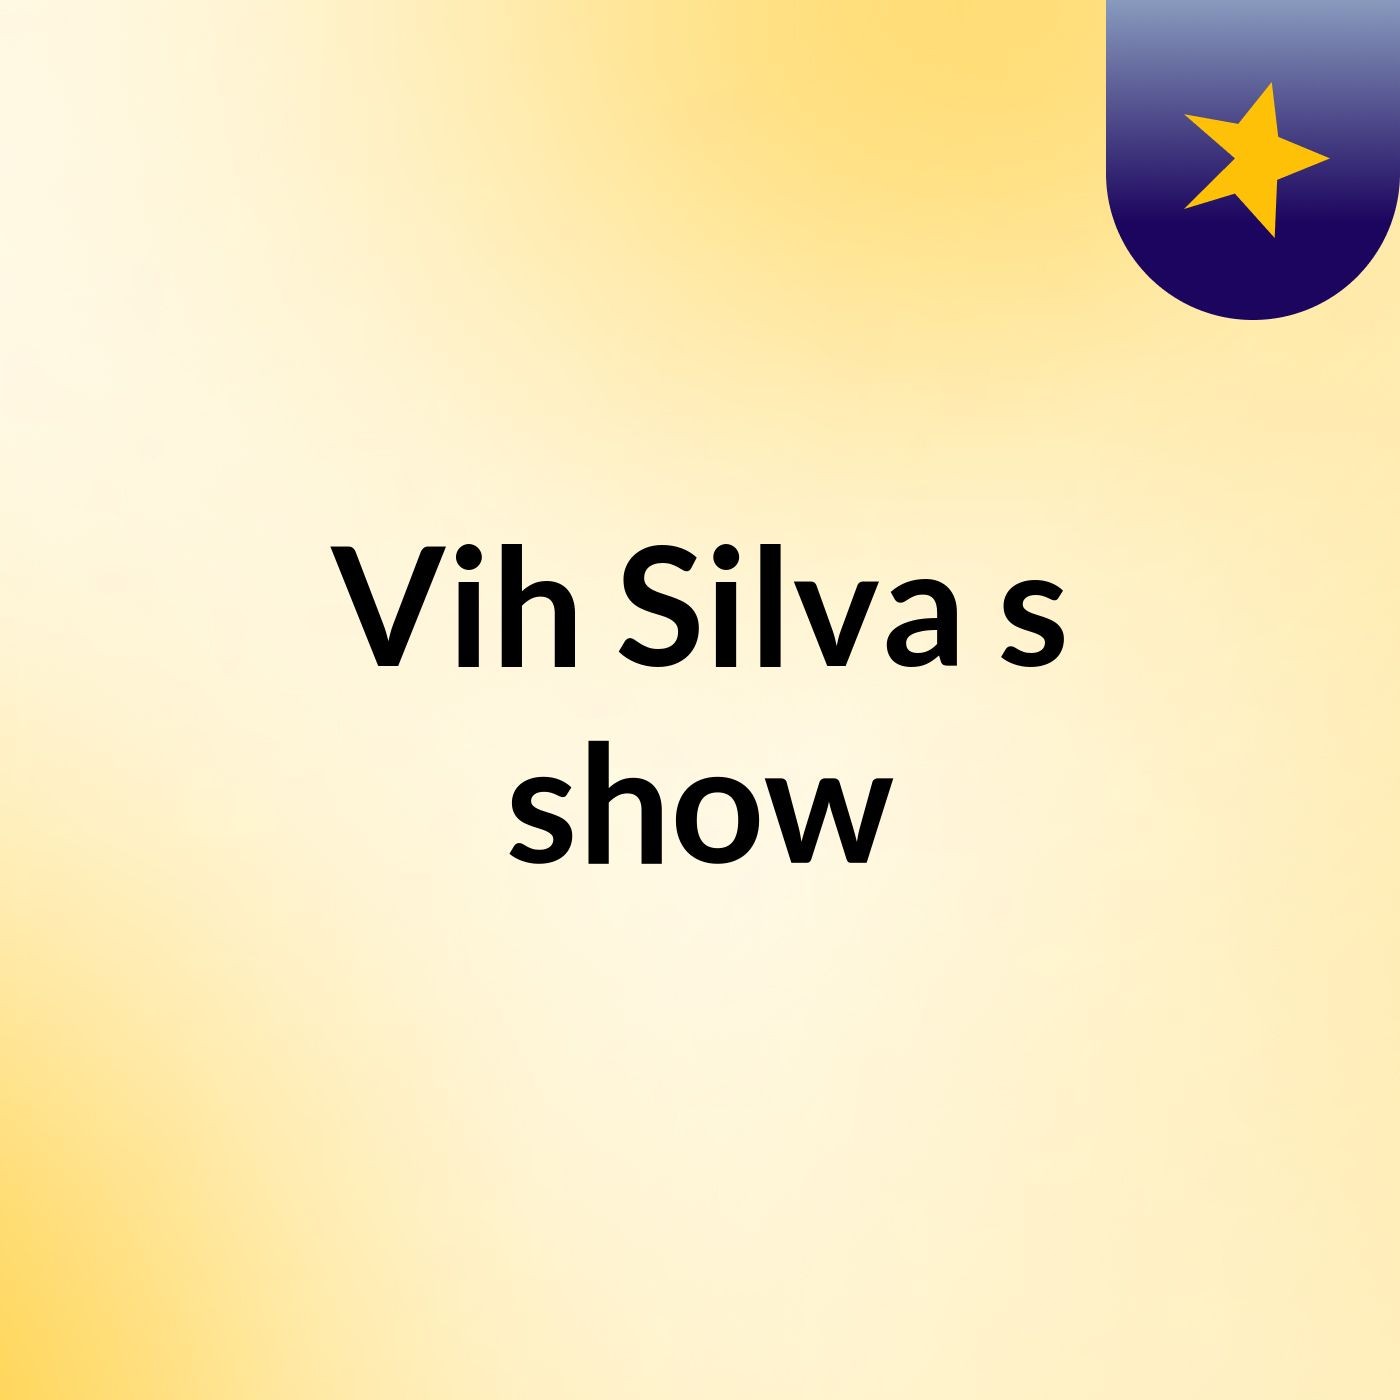 Vih Silva's show